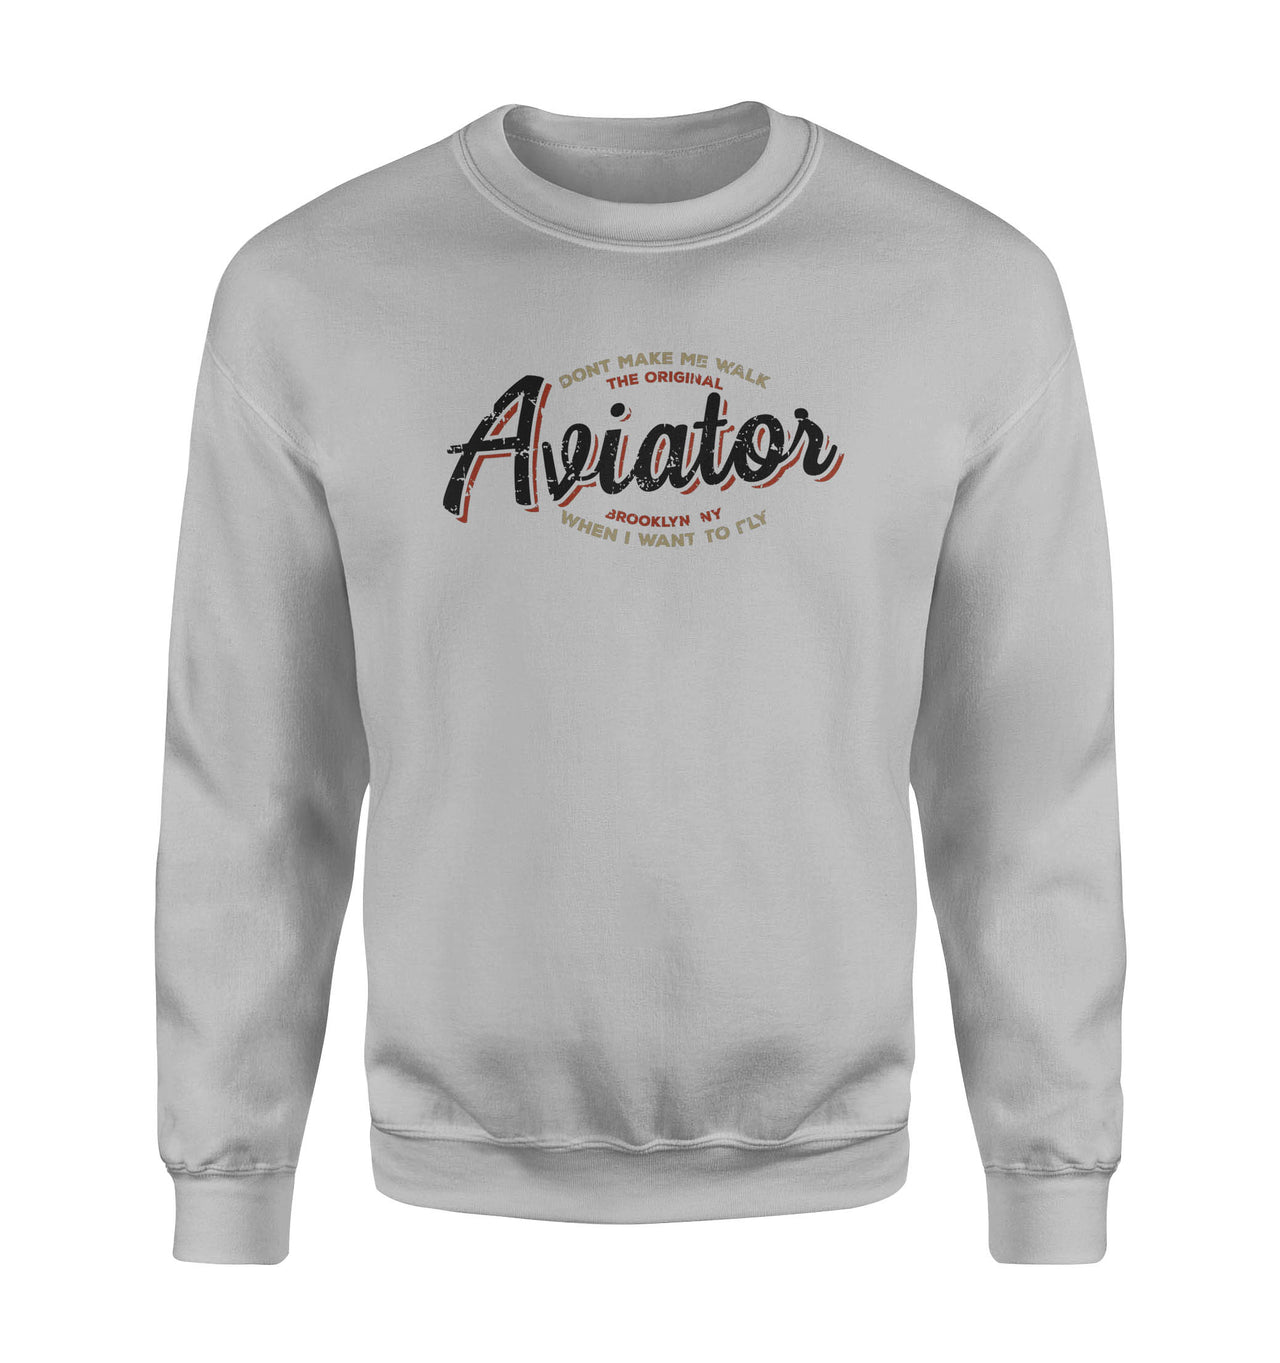 Aviator - Dont Make Me Walk Designed Sweatshirts